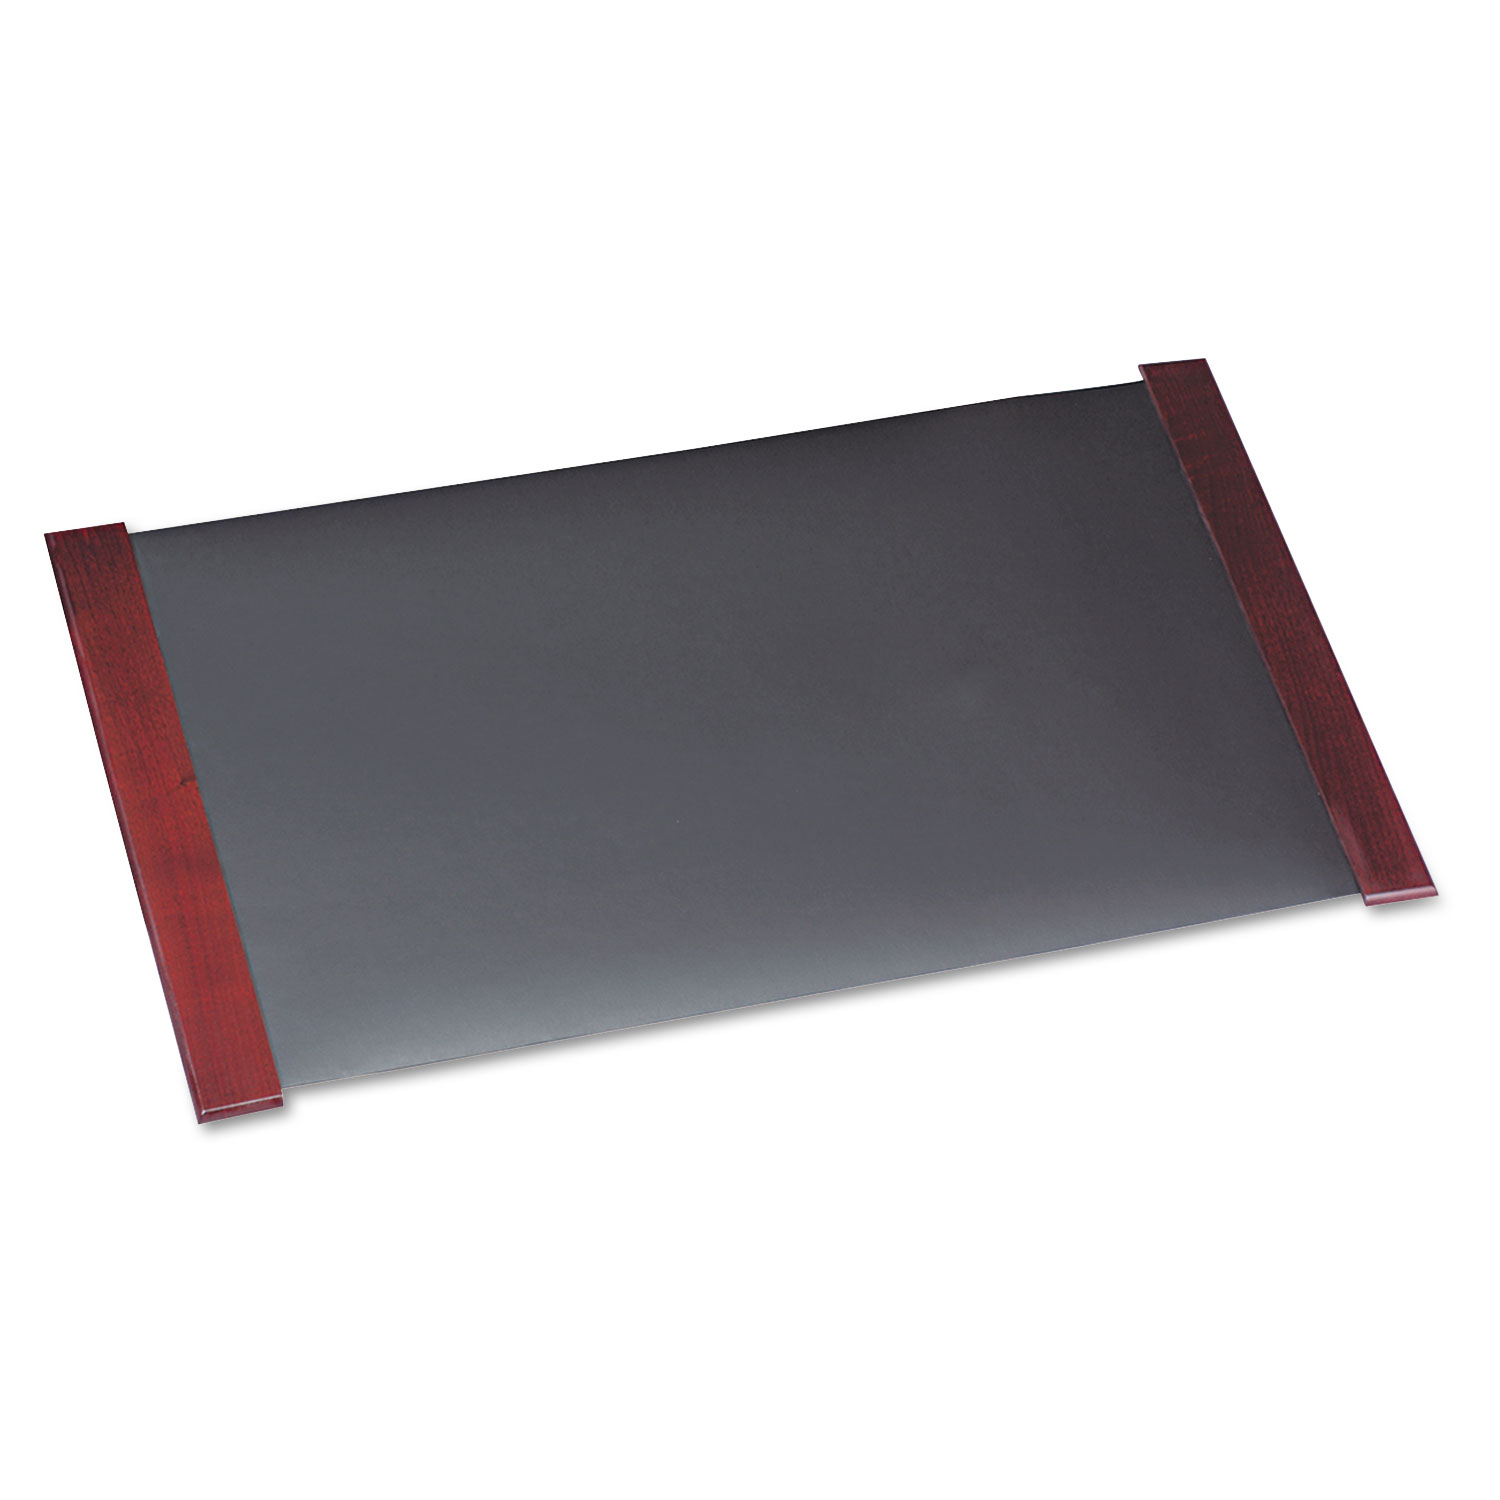  Carver CW02043 Desk Pad with Wood End Panels, 38 x 21, Mahogany Finish (CVR02043) 